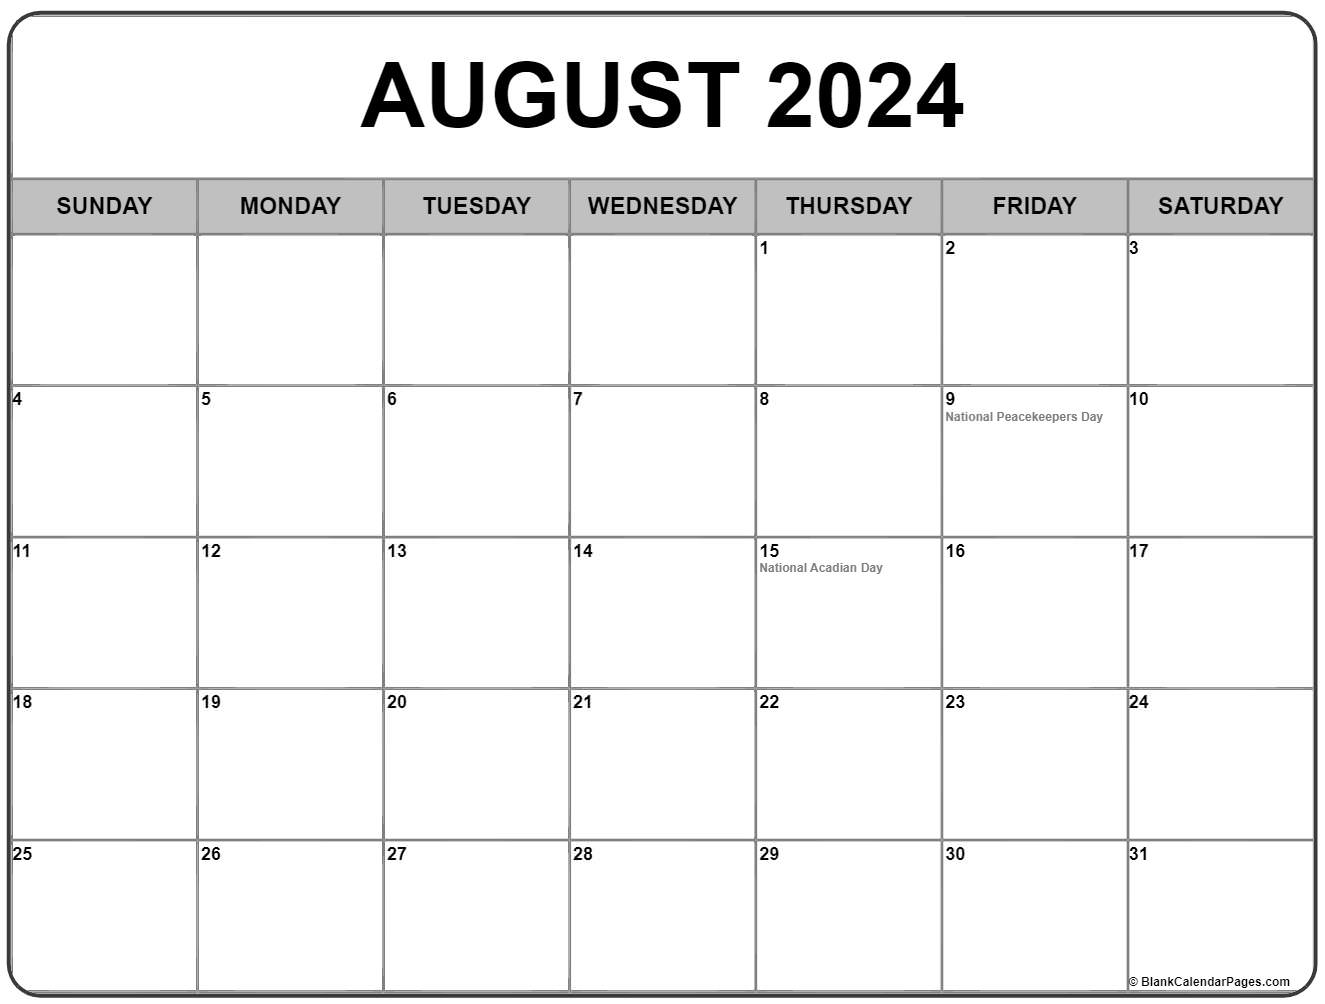 August 2021 calendar with holidays